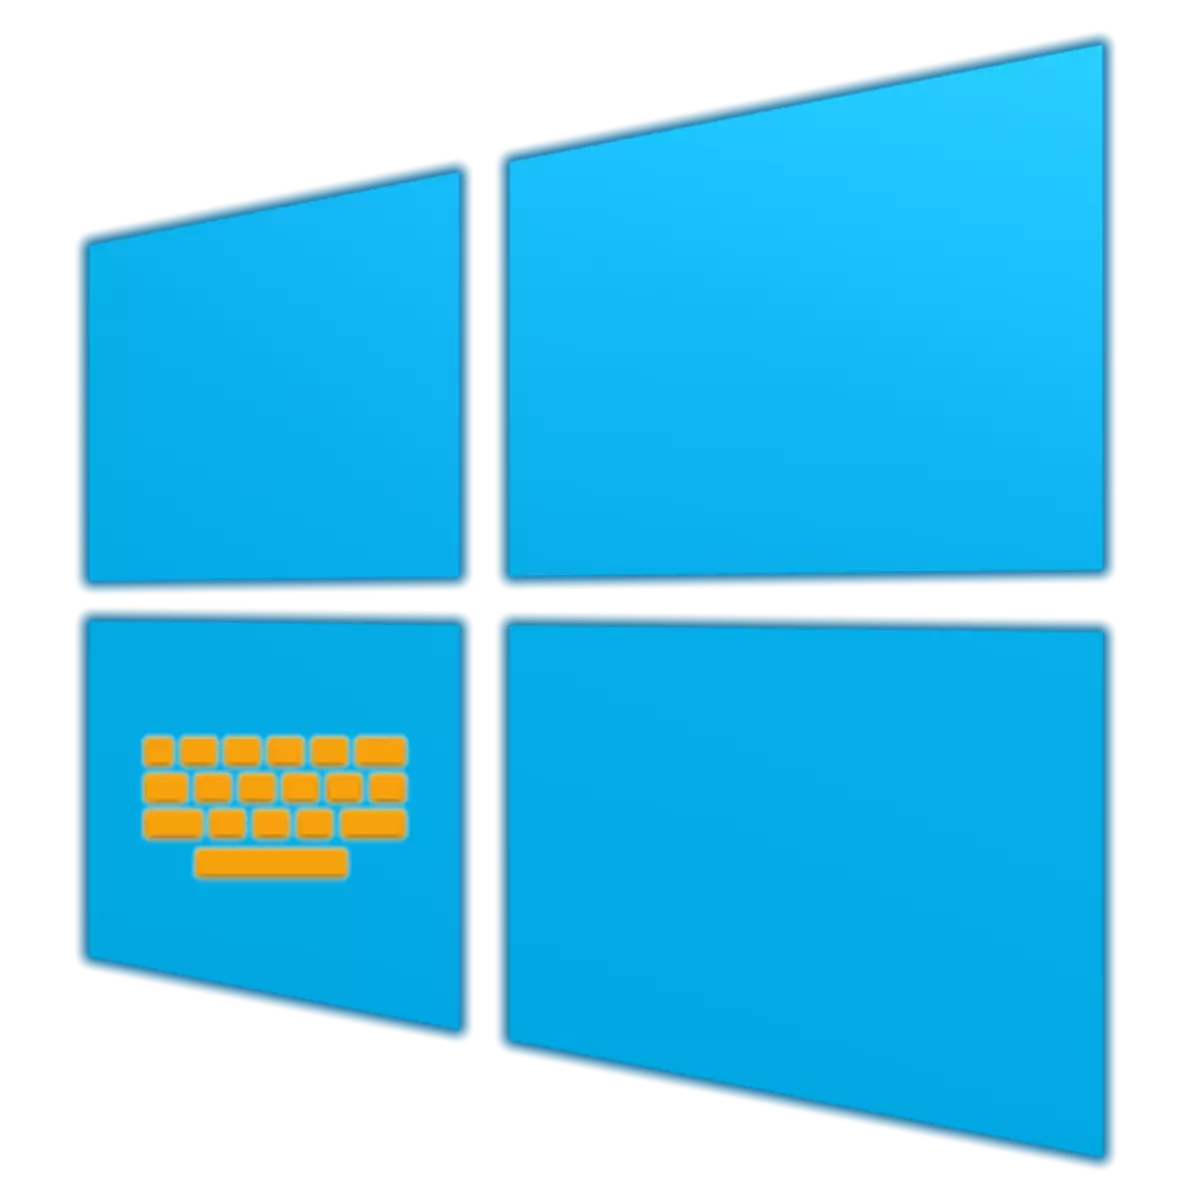 Kako konfigurirati preklapljanje postavitev v operacijskem sistemu Windows 10